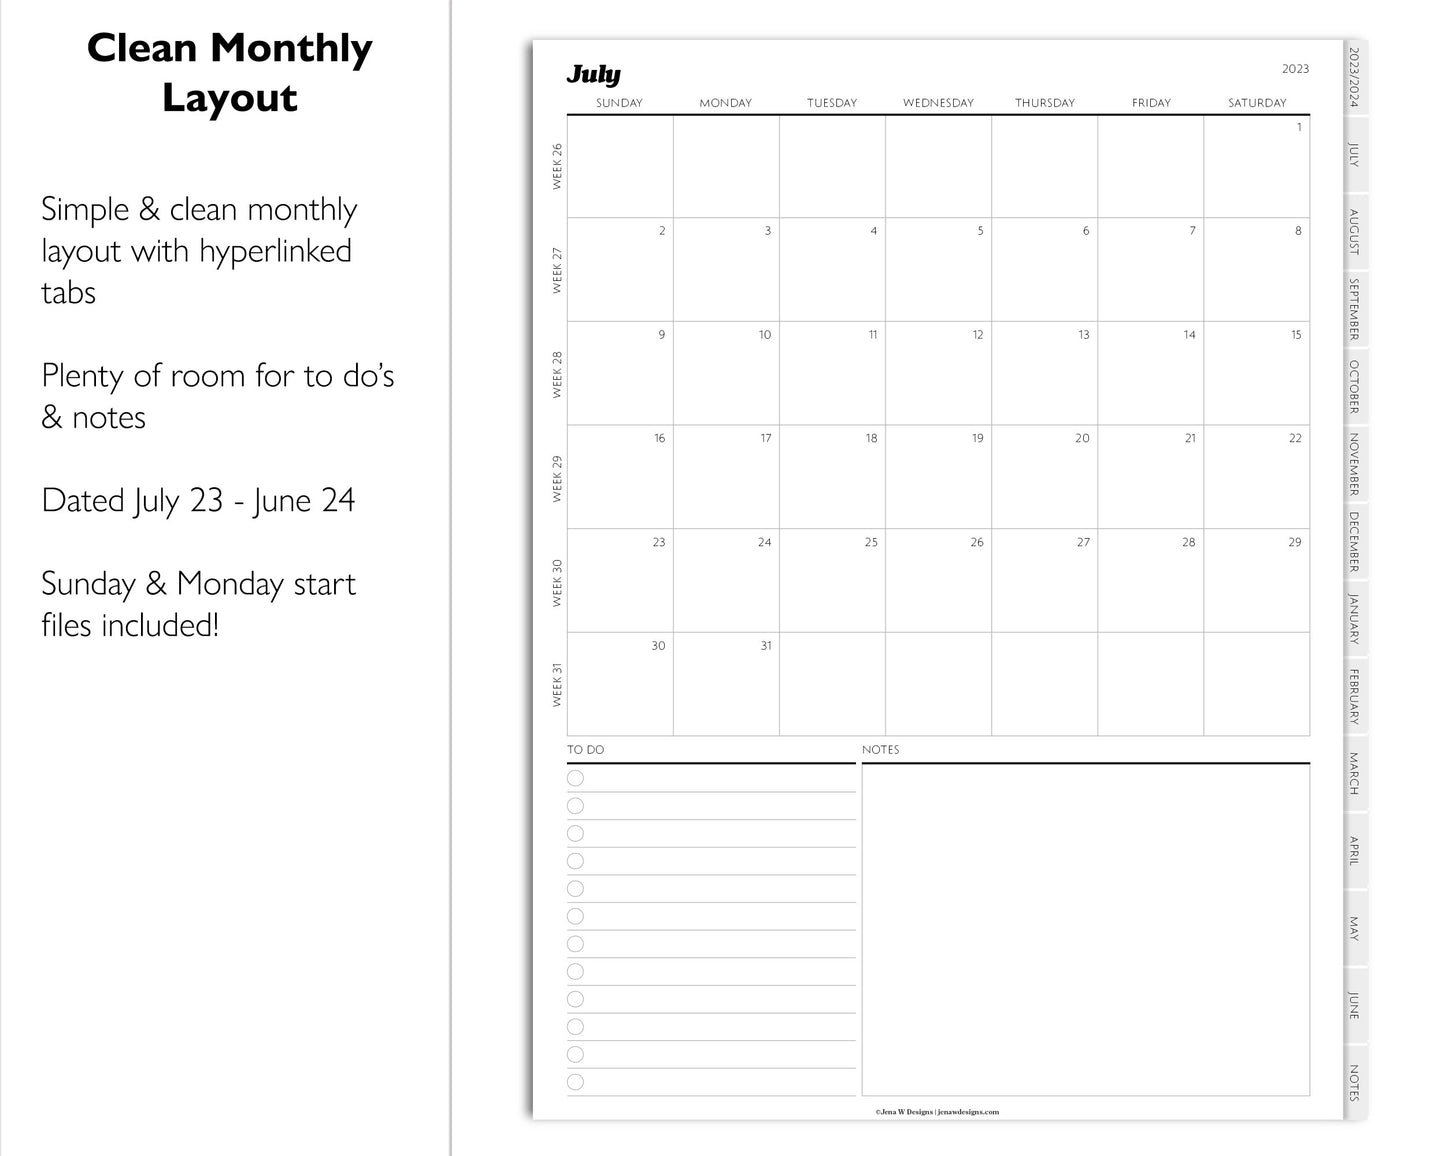 2023 2024 Mid Year Monthly Digital Planner | Simple Minimal